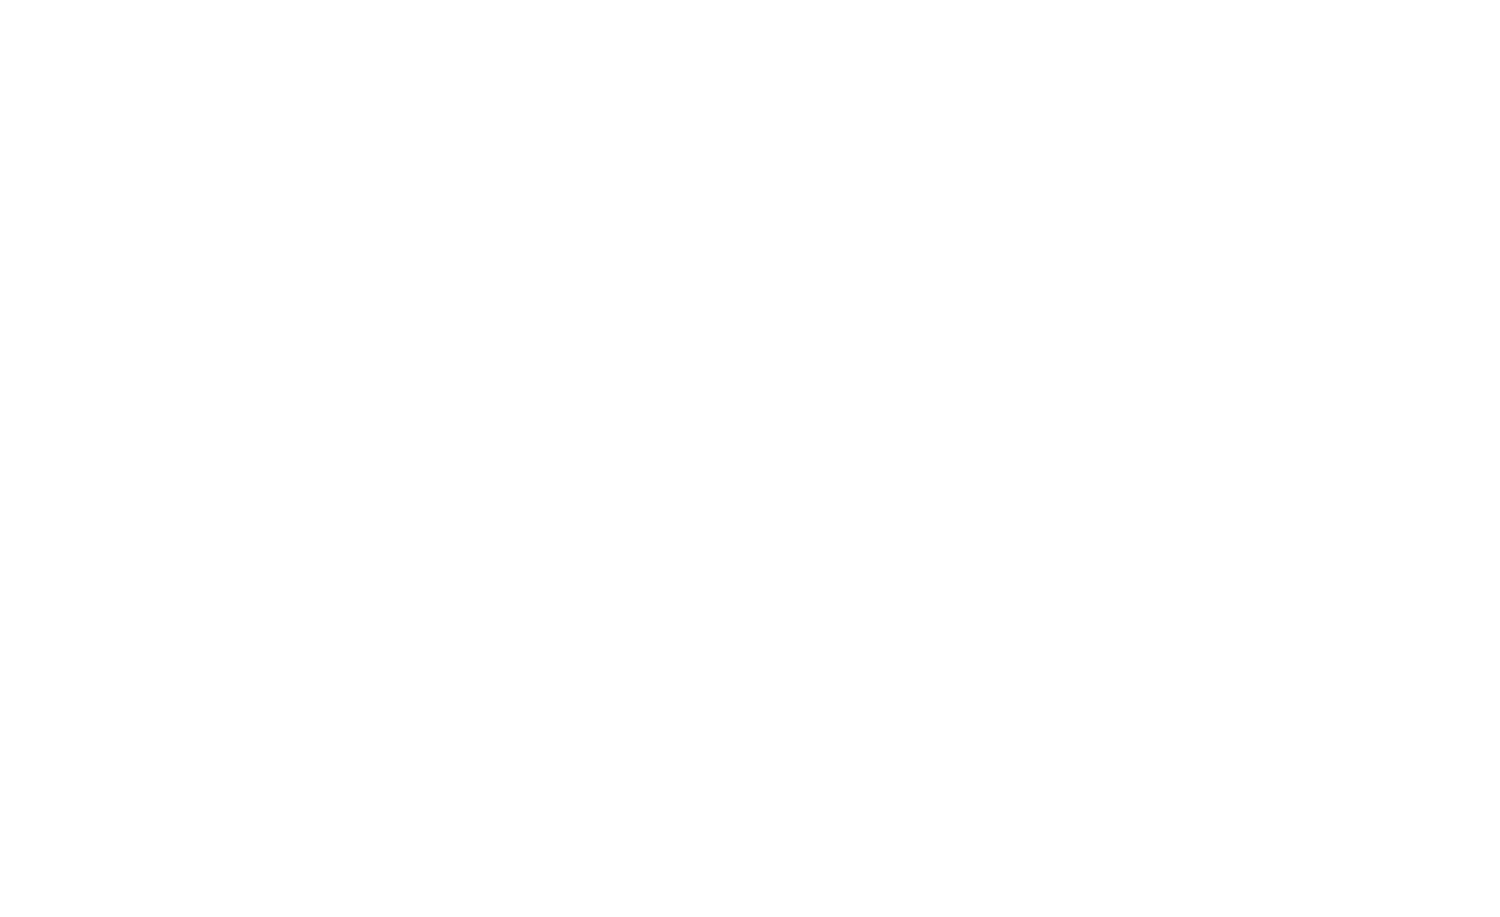 Hot Baby Octopus Amplification